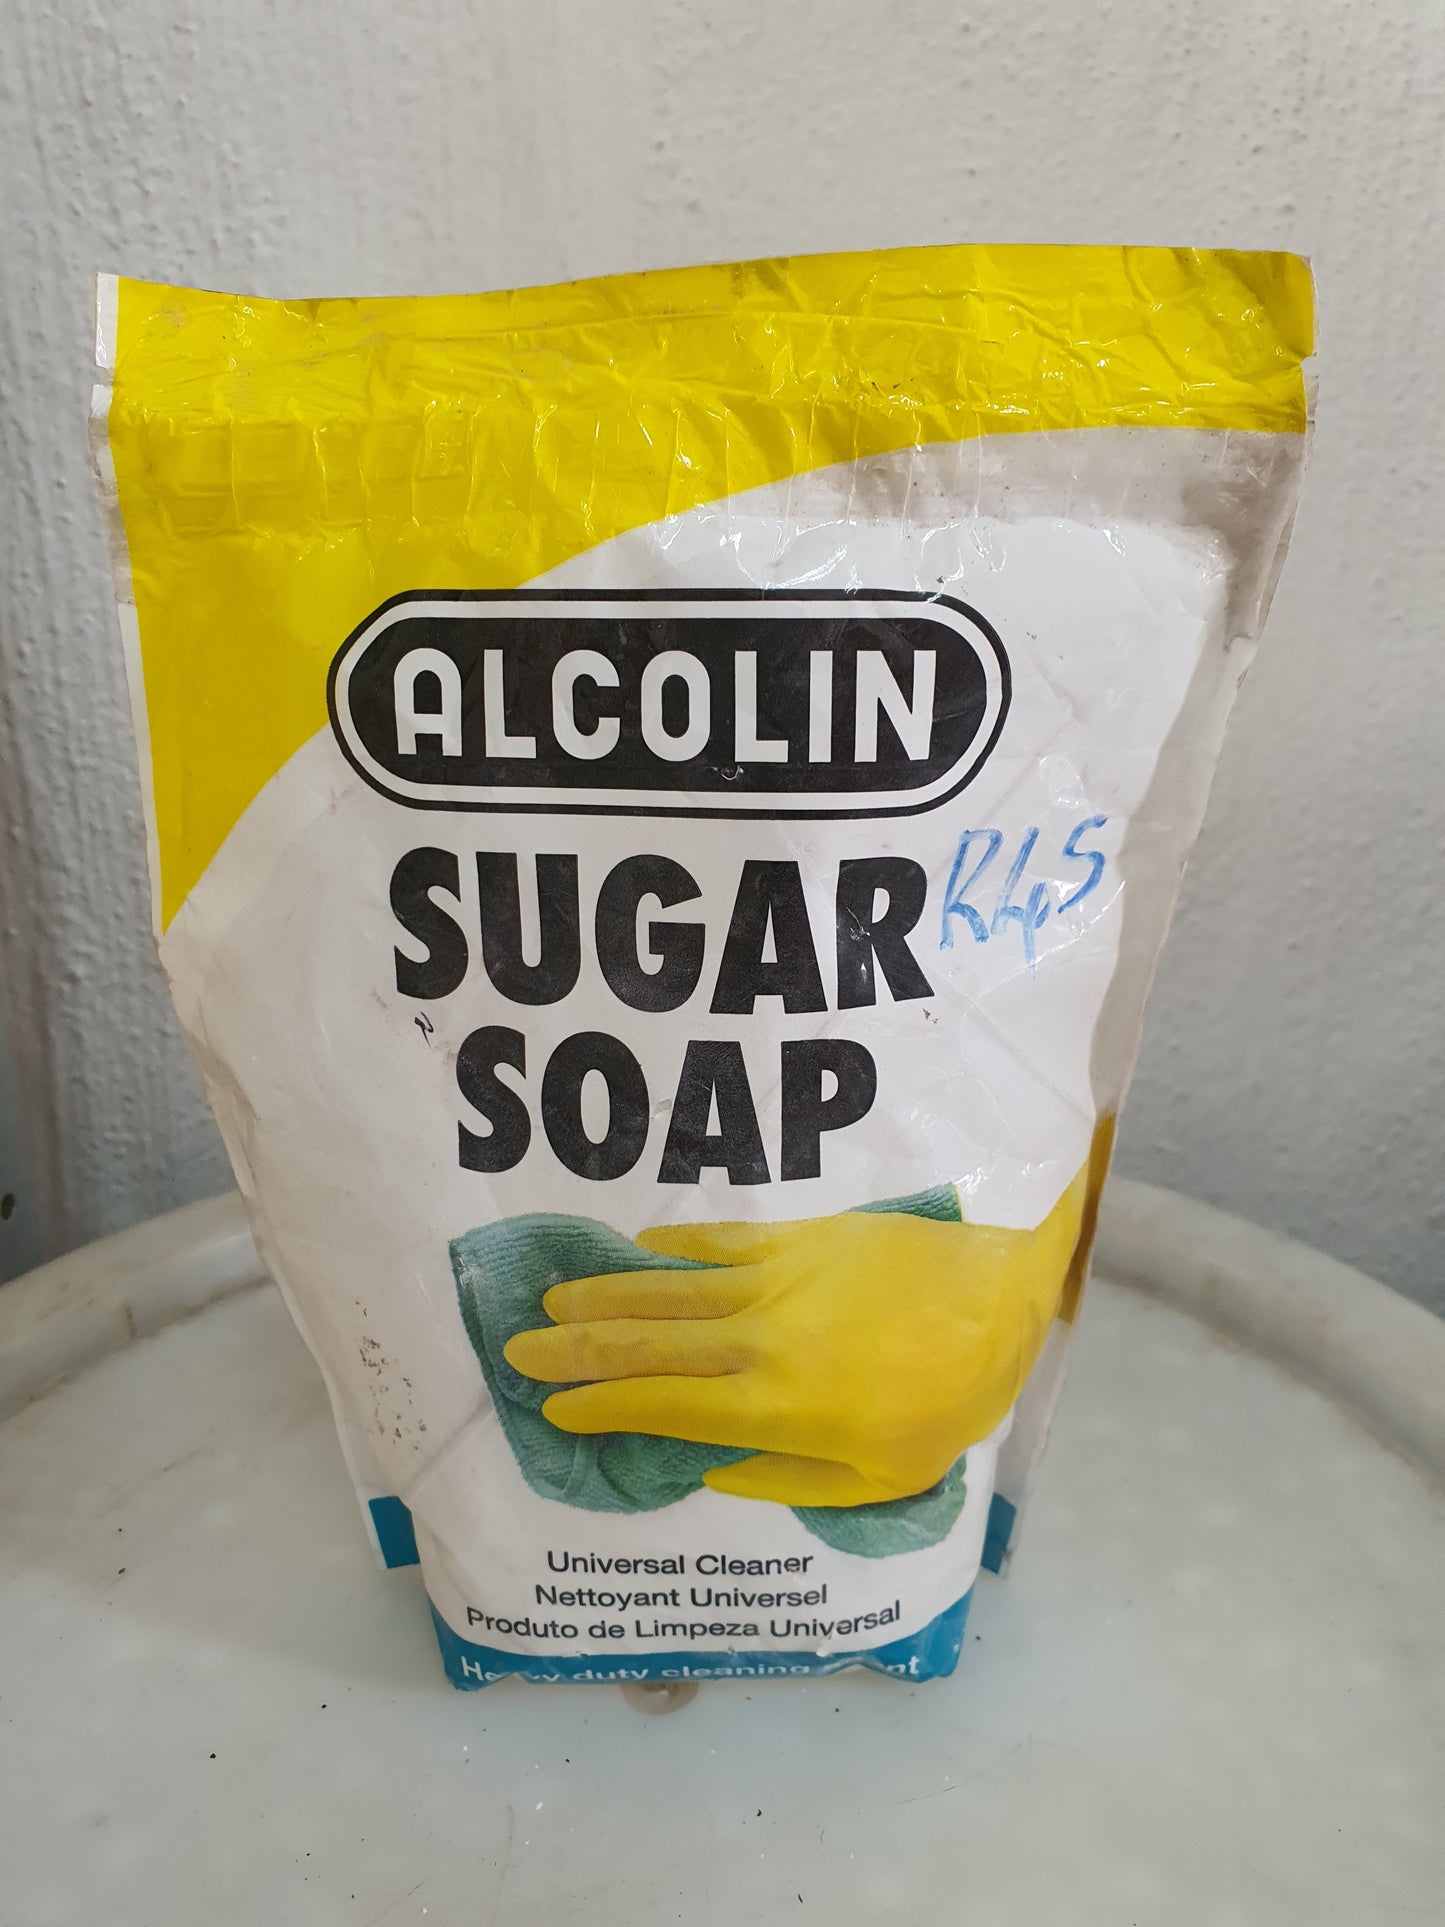 Sugar soap